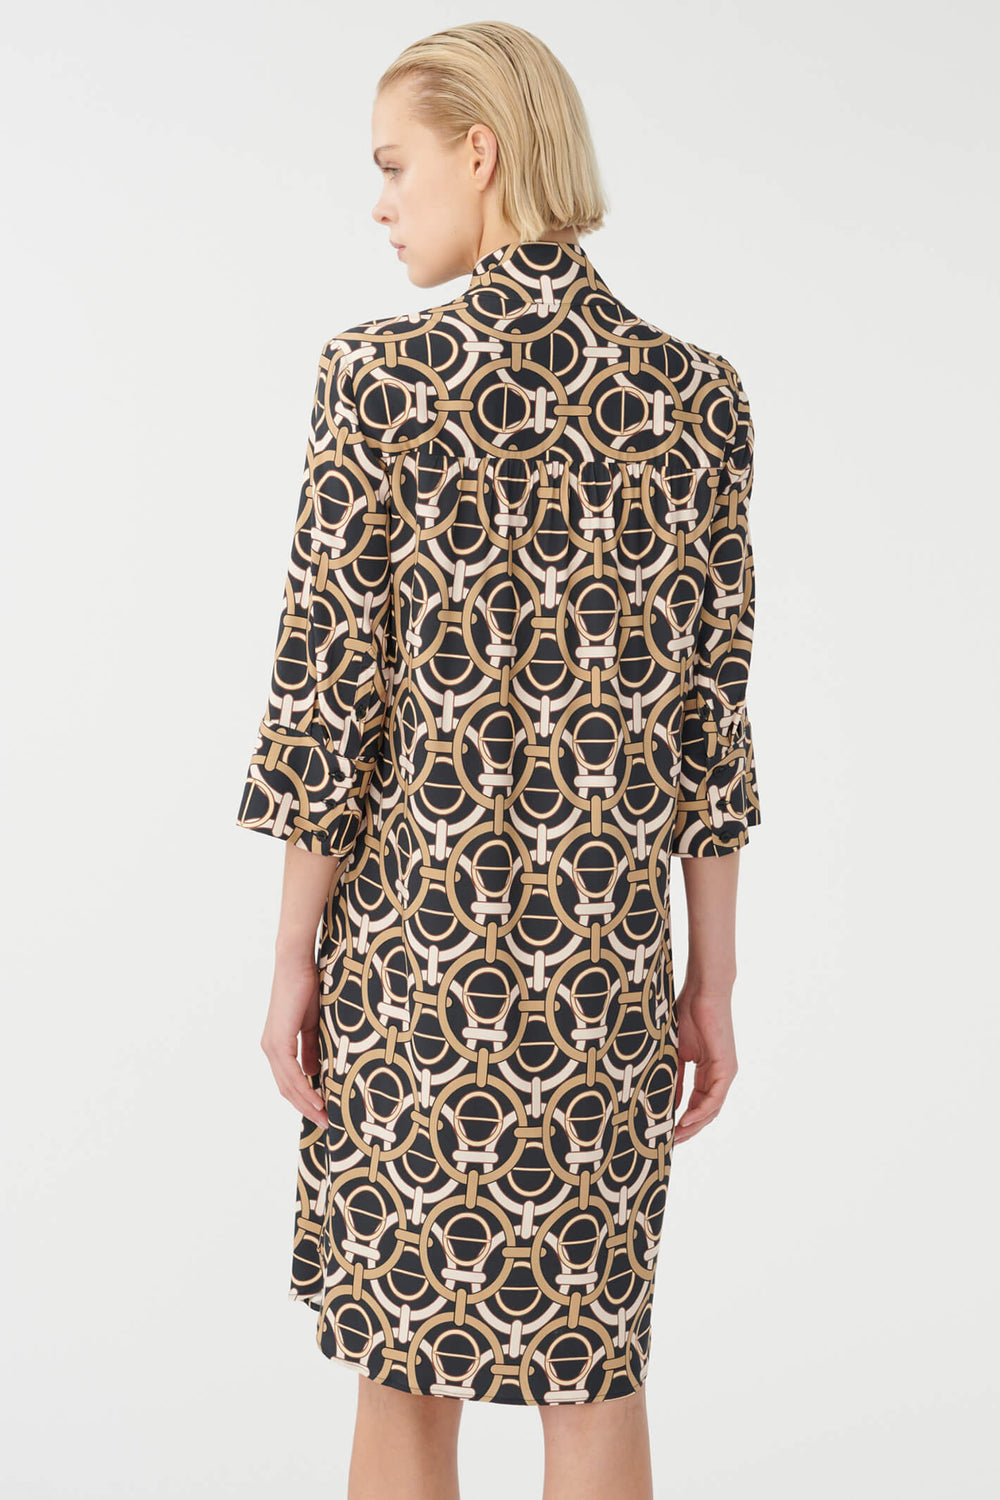 Dea Kudibal Kamilles 0841023 Canter Zest Gold Print Shirt Dress - Olivia Grace Fashion